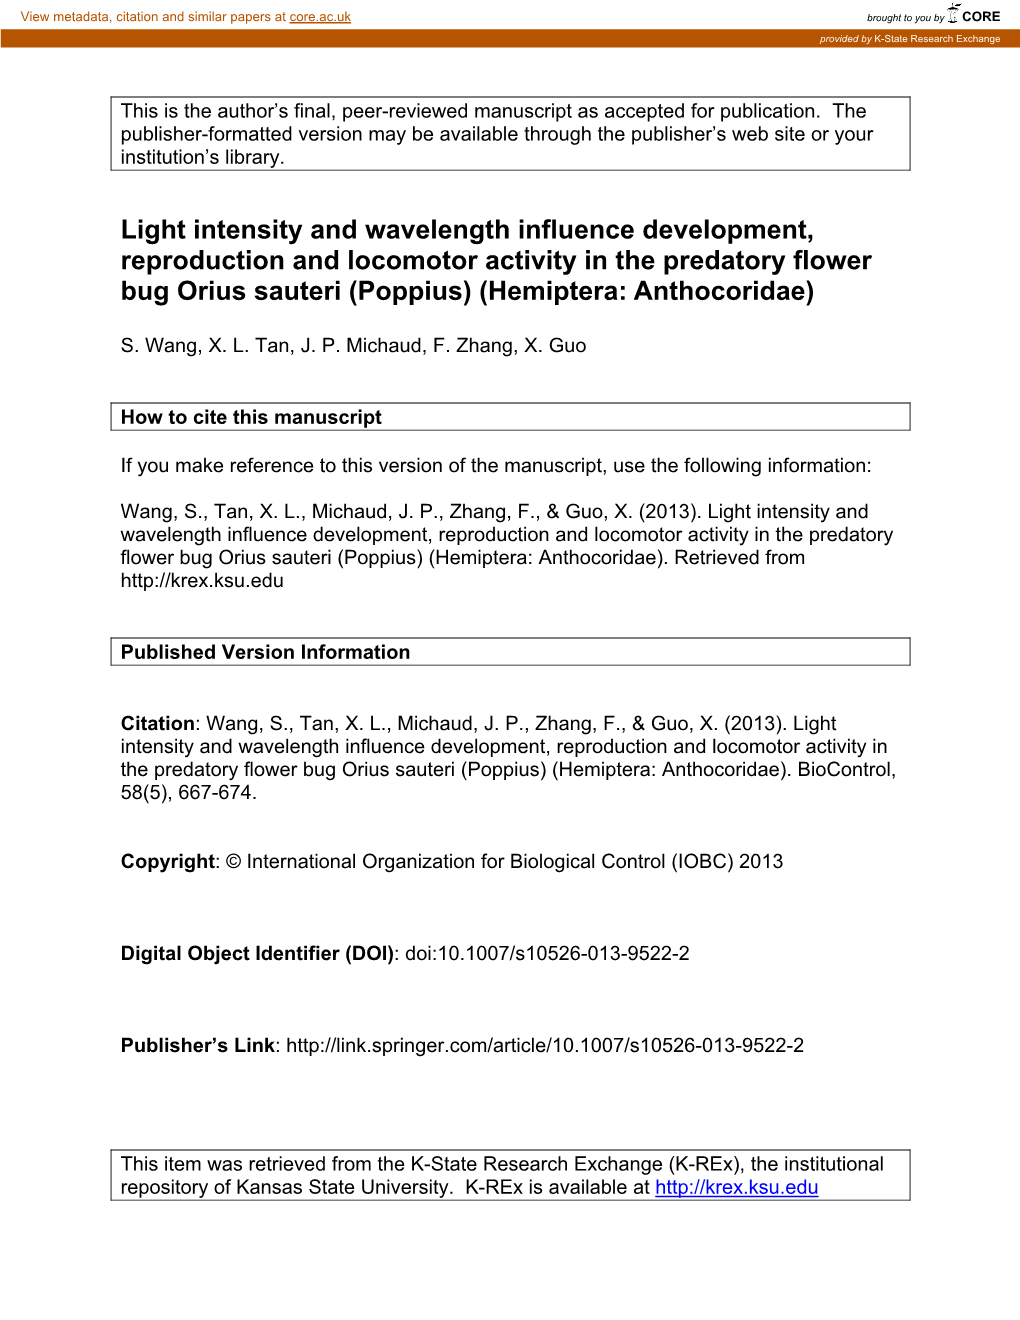 Light Intensity and Wavelength Influence Development